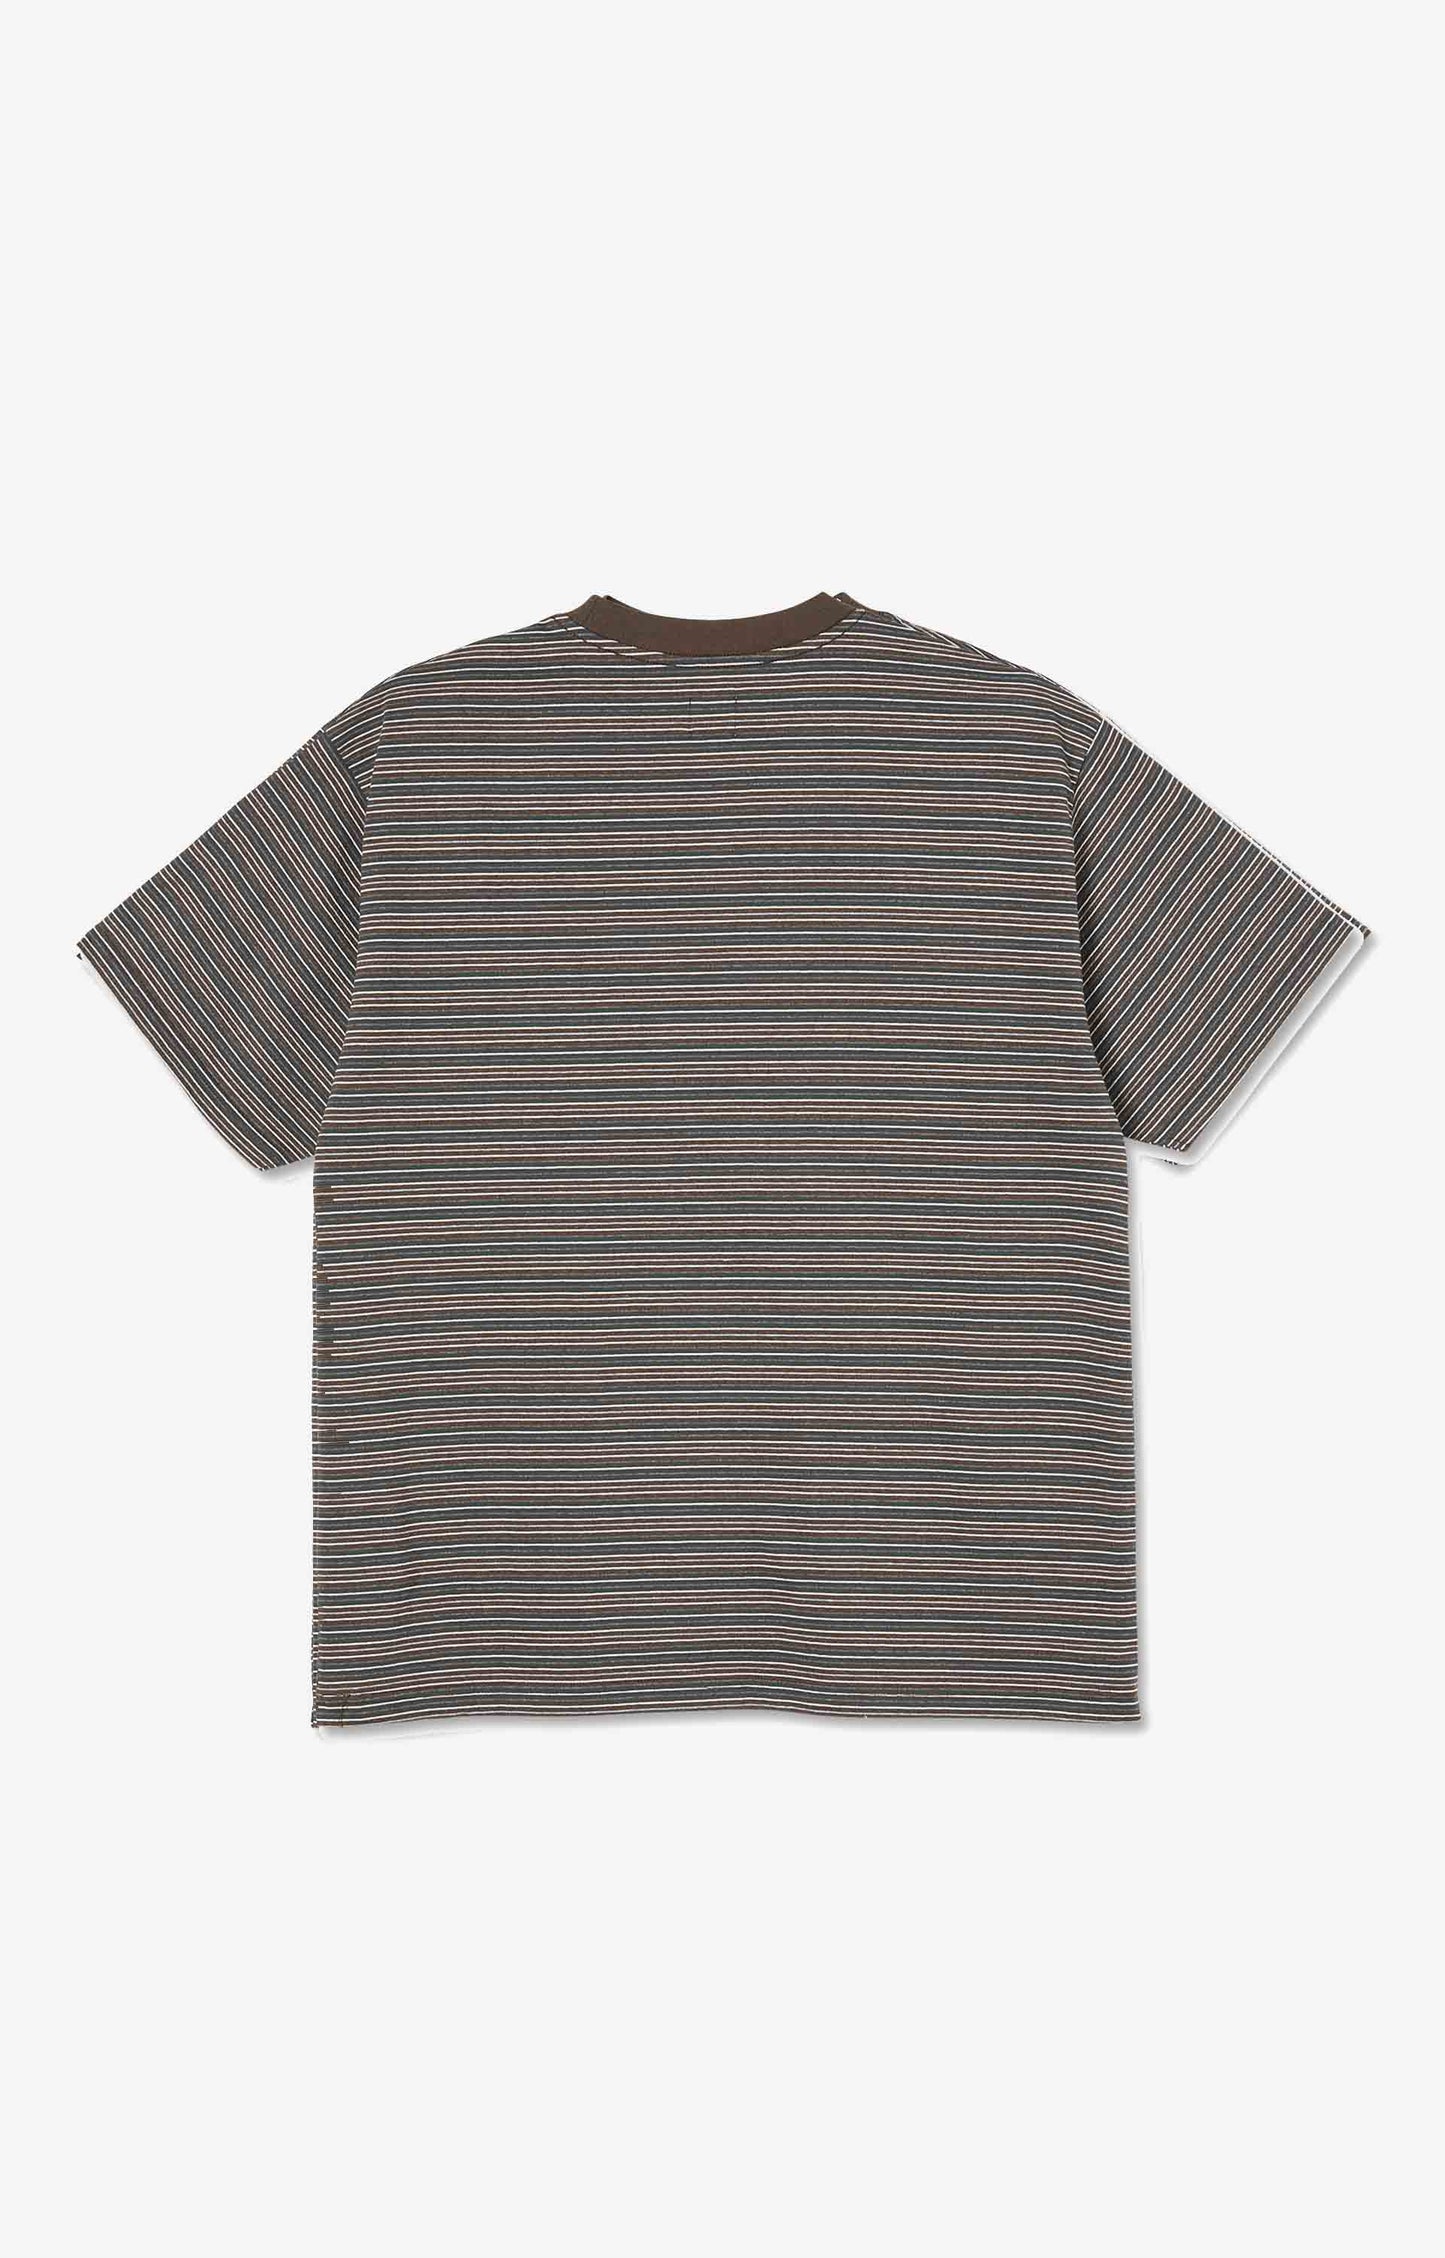 Polar Skate Co Stripe Pocket T-Shirt, Brown